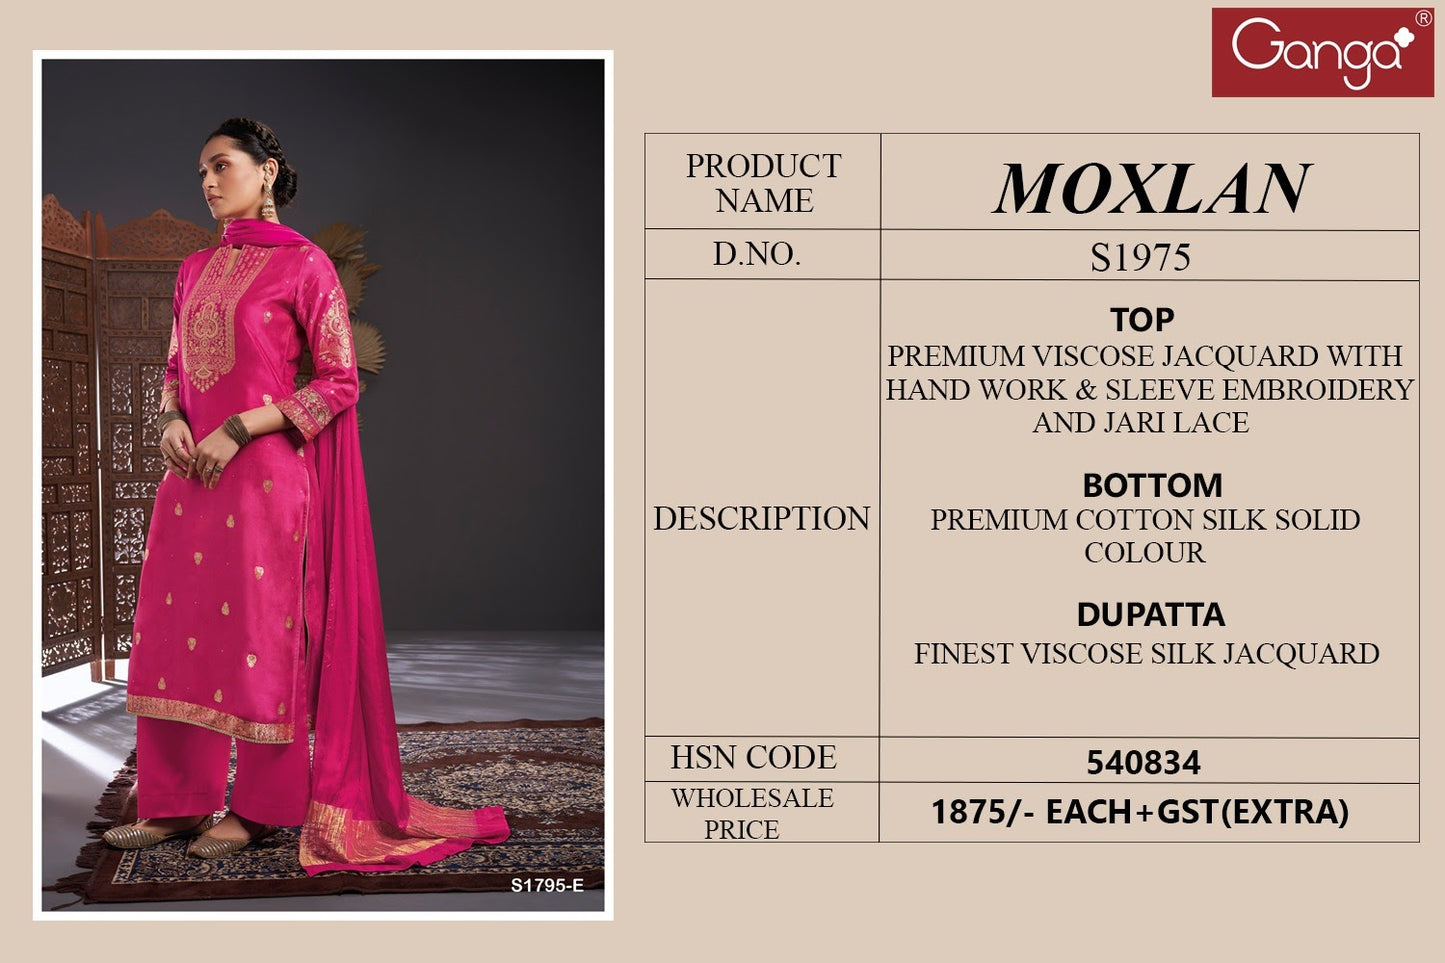 S1975-Abcdef Moxlan Ganga Viscose Jacquard Plazzo Style Suits